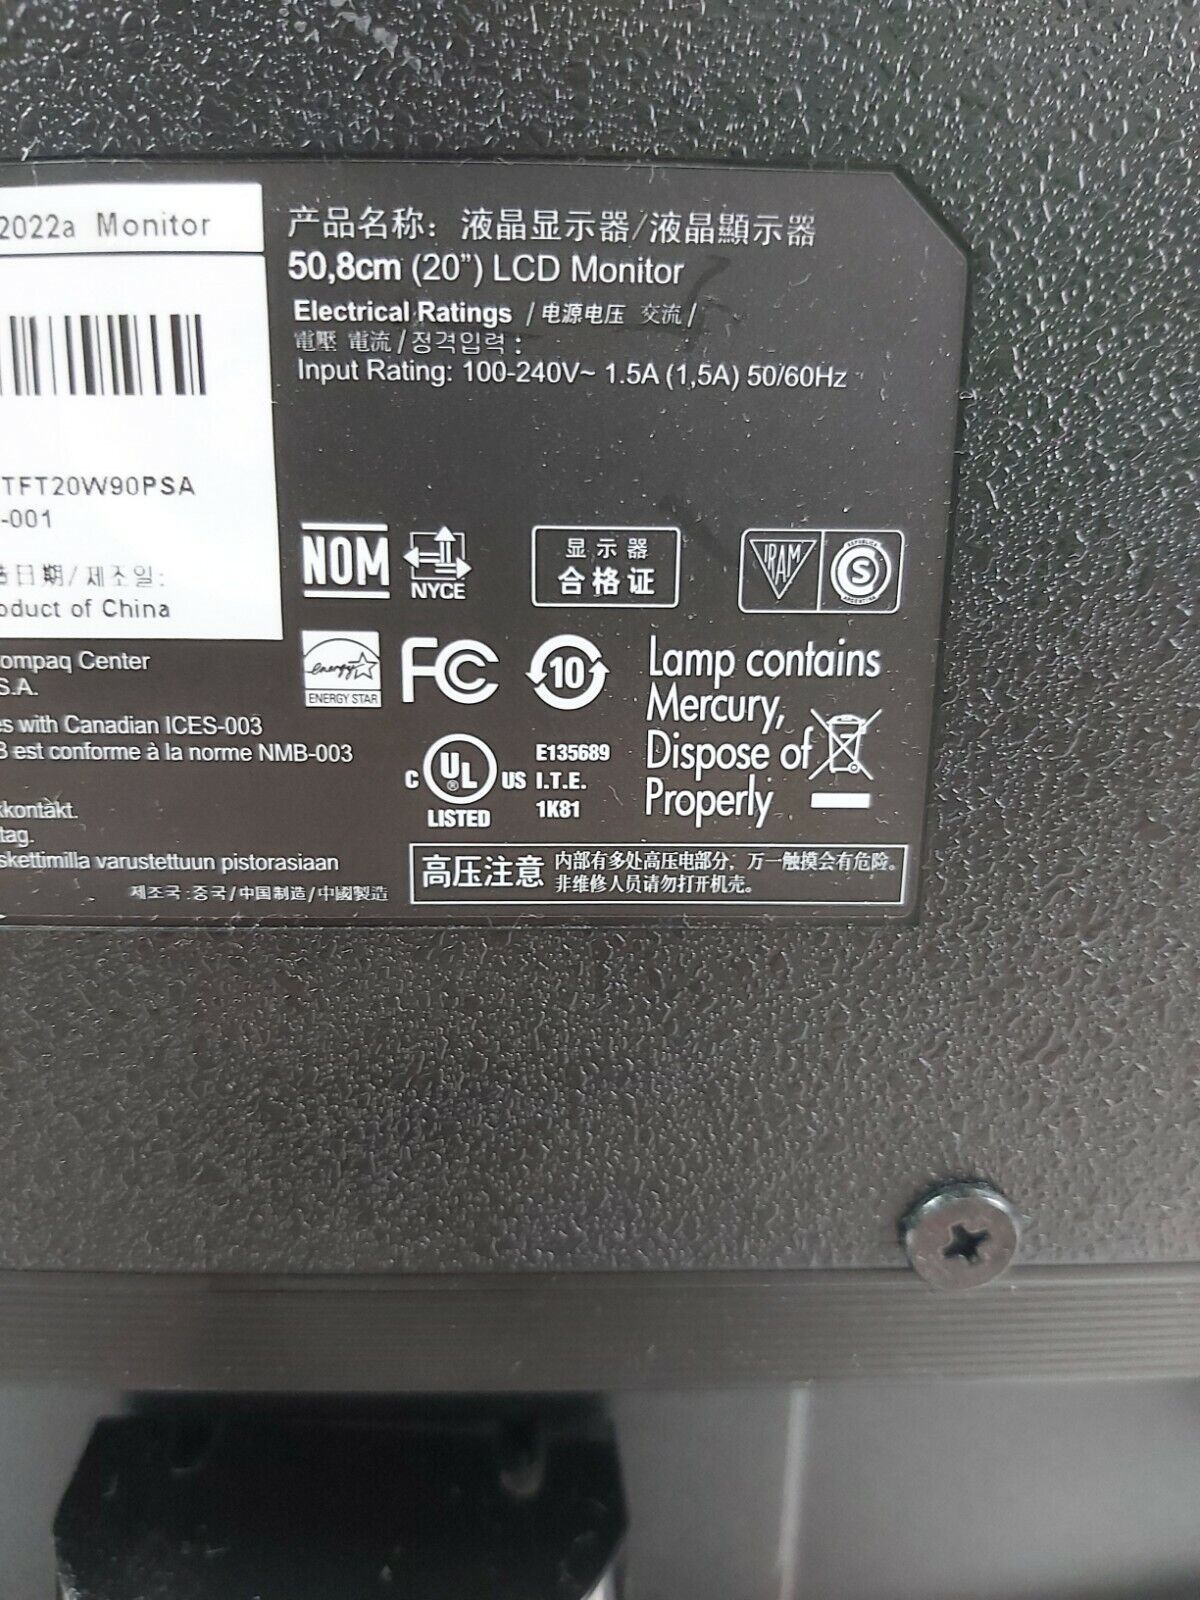 HP Compaq S2022a 20" LCD Monitor WM768A Grade C Pwr Cord Included